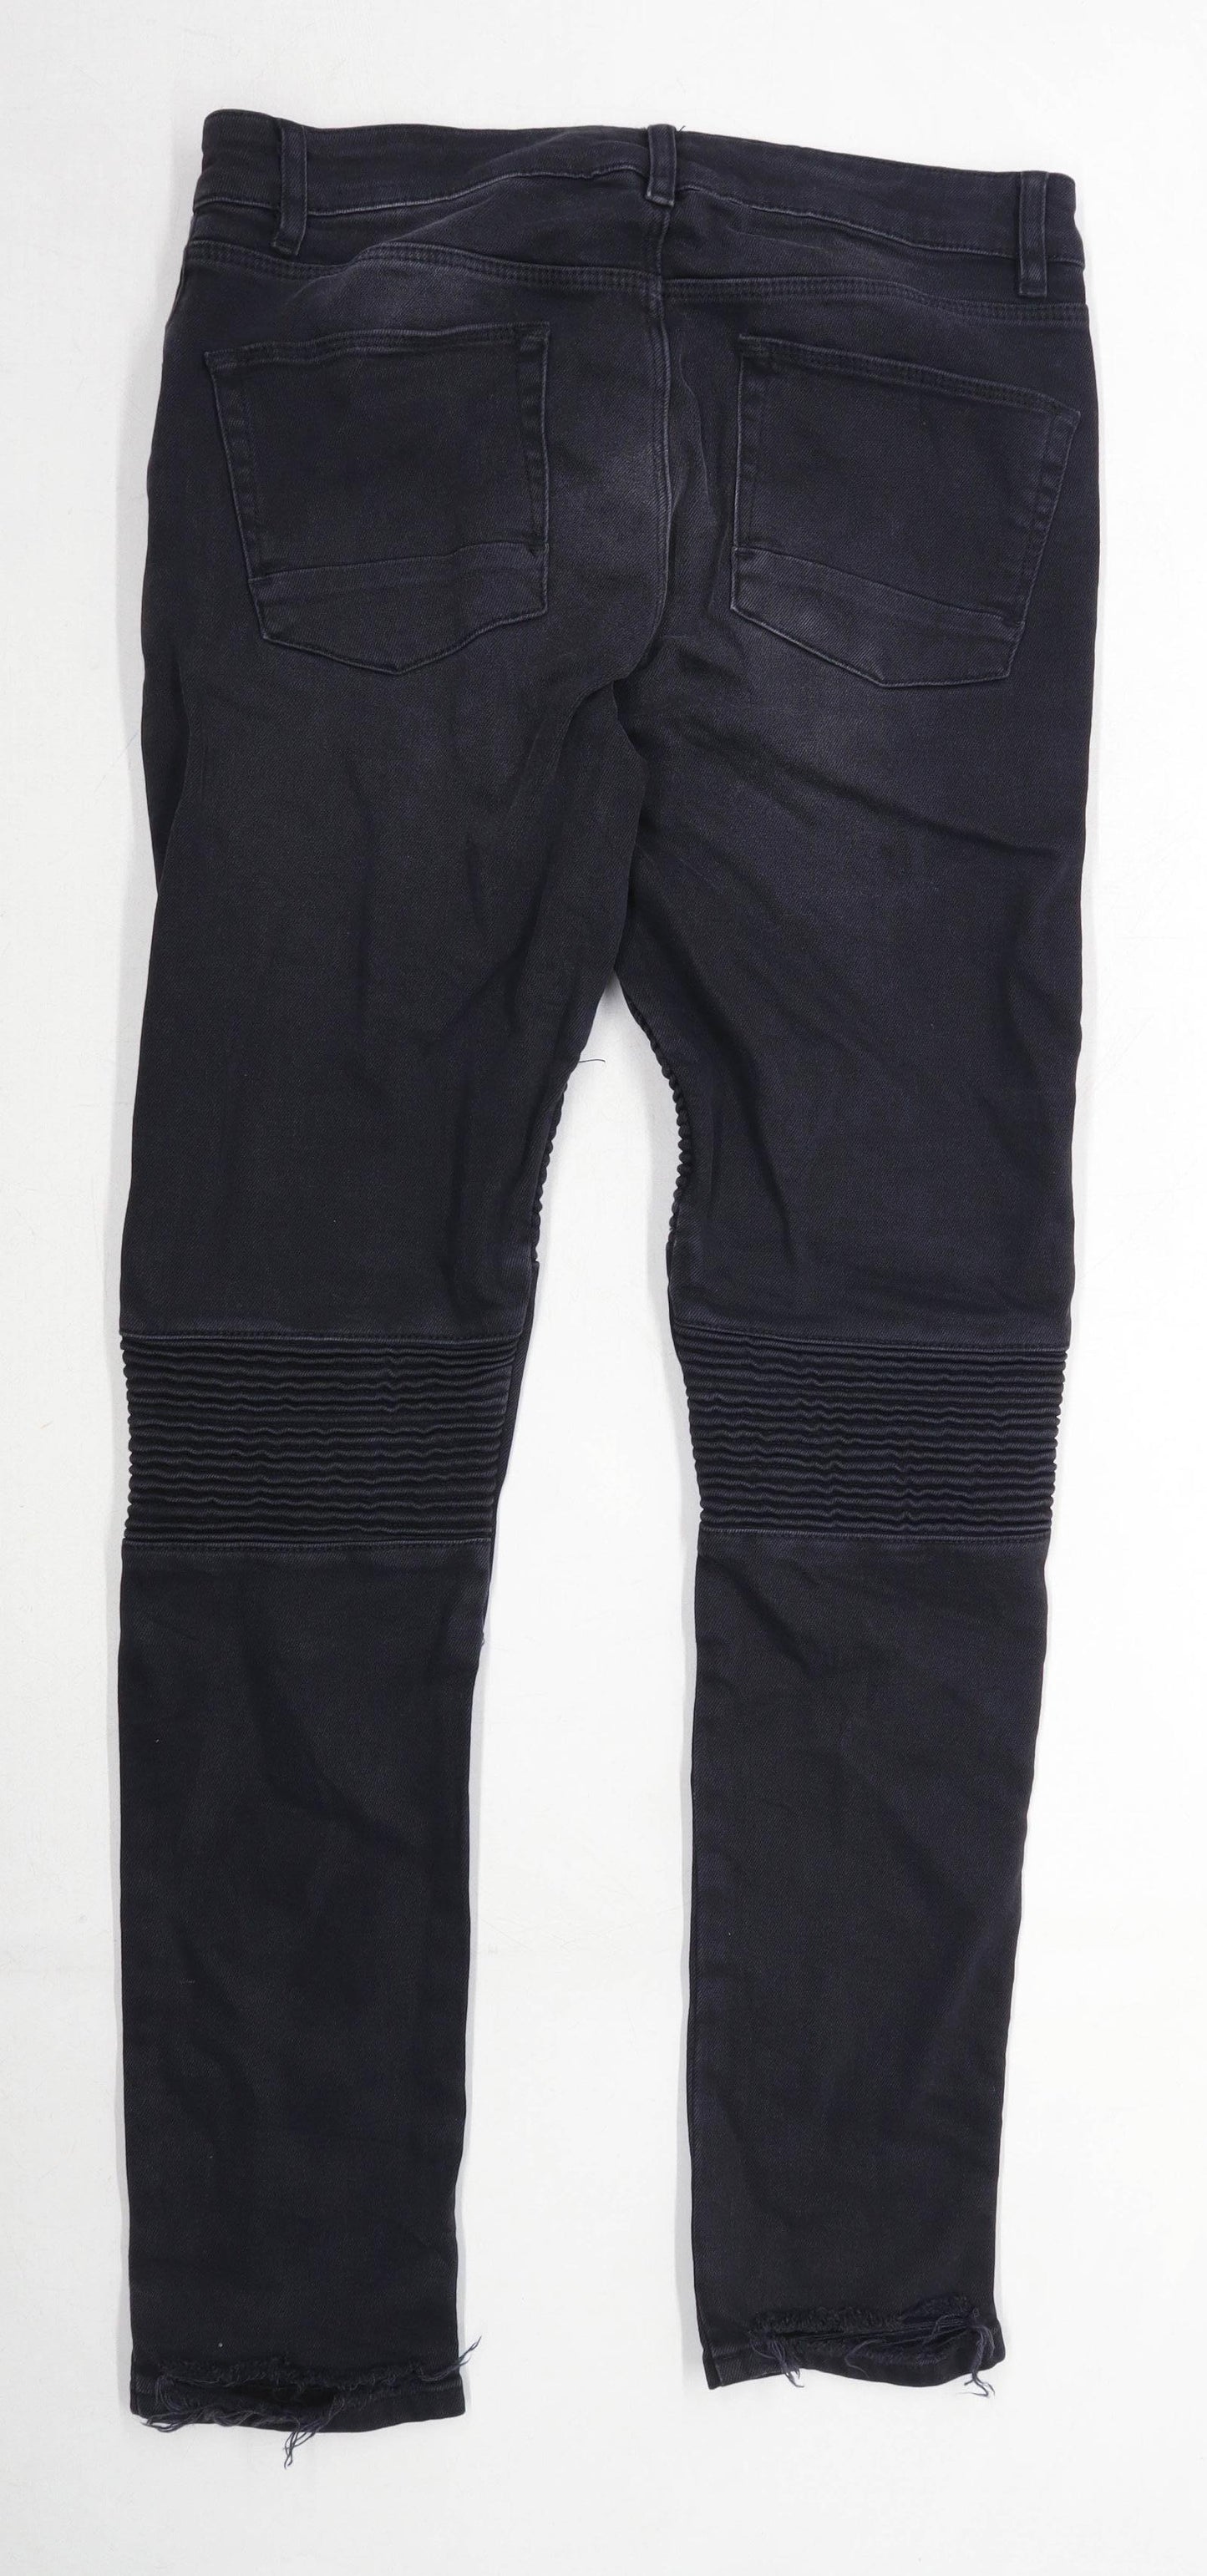 Asos Mens Black Ripped Denim Jeans Size W32/L30